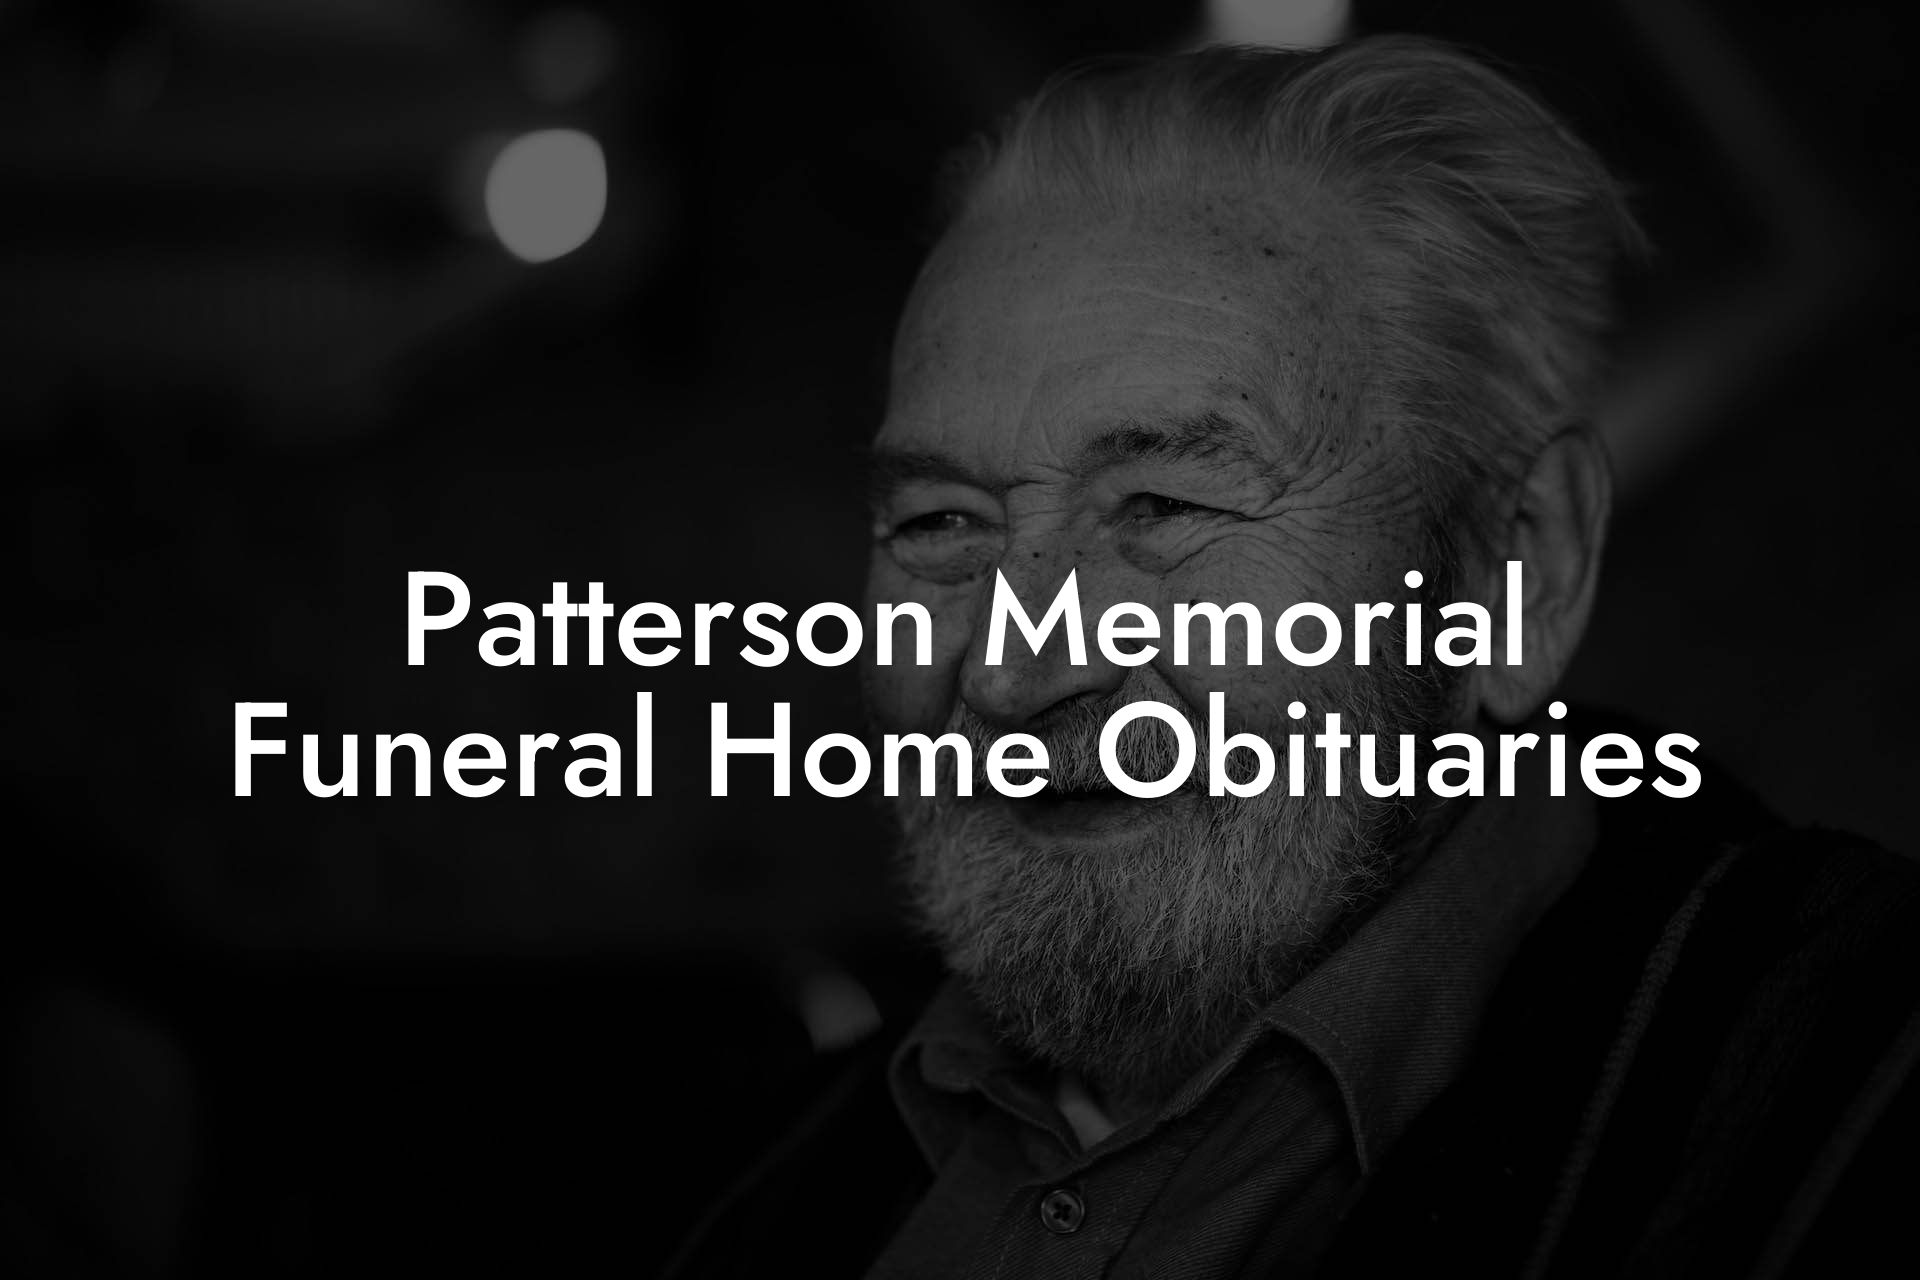 Patterson Memorial Funeral Home Obituaries